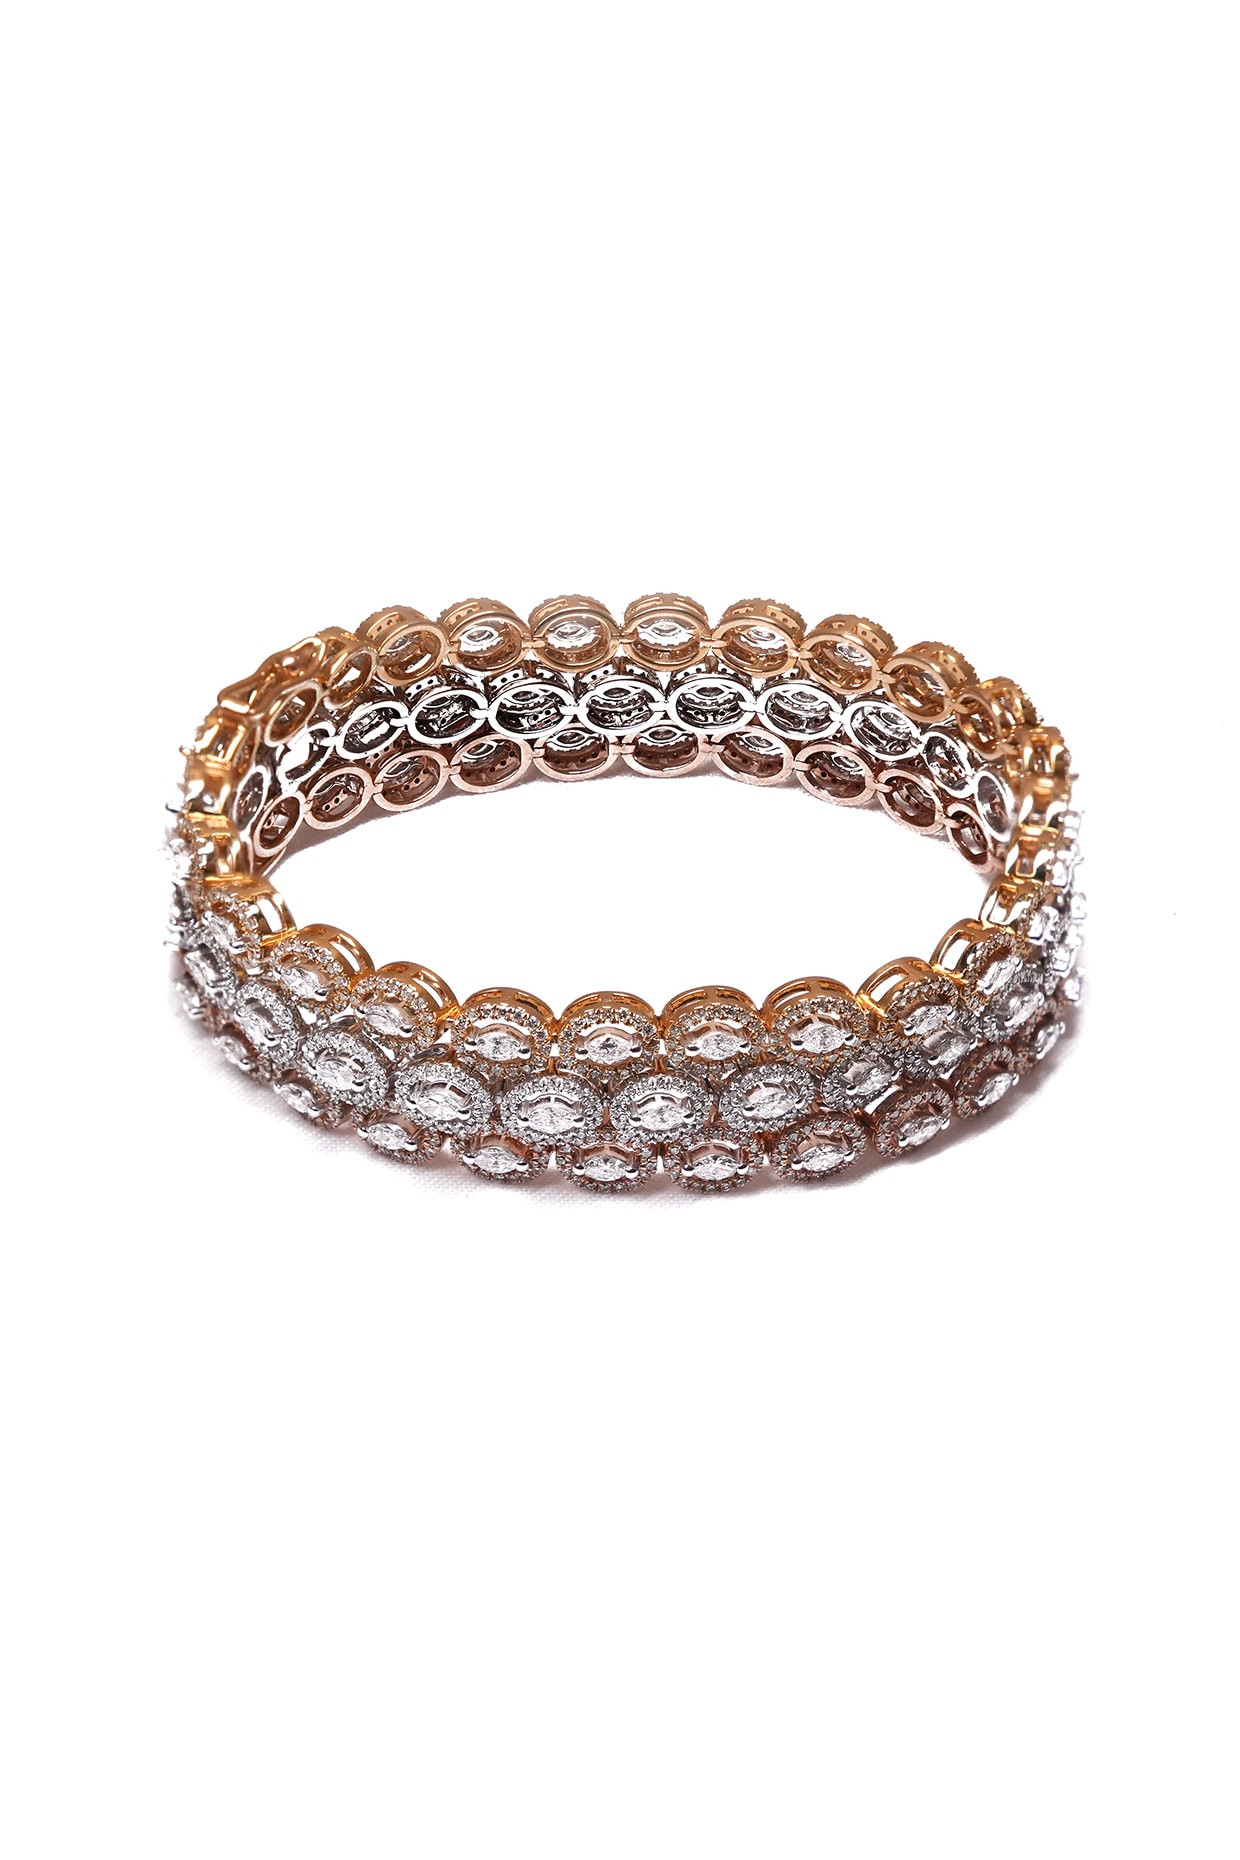 Buy Diamond Bracelets Online | Latest Diamond Bracelet Designs | CaratLane